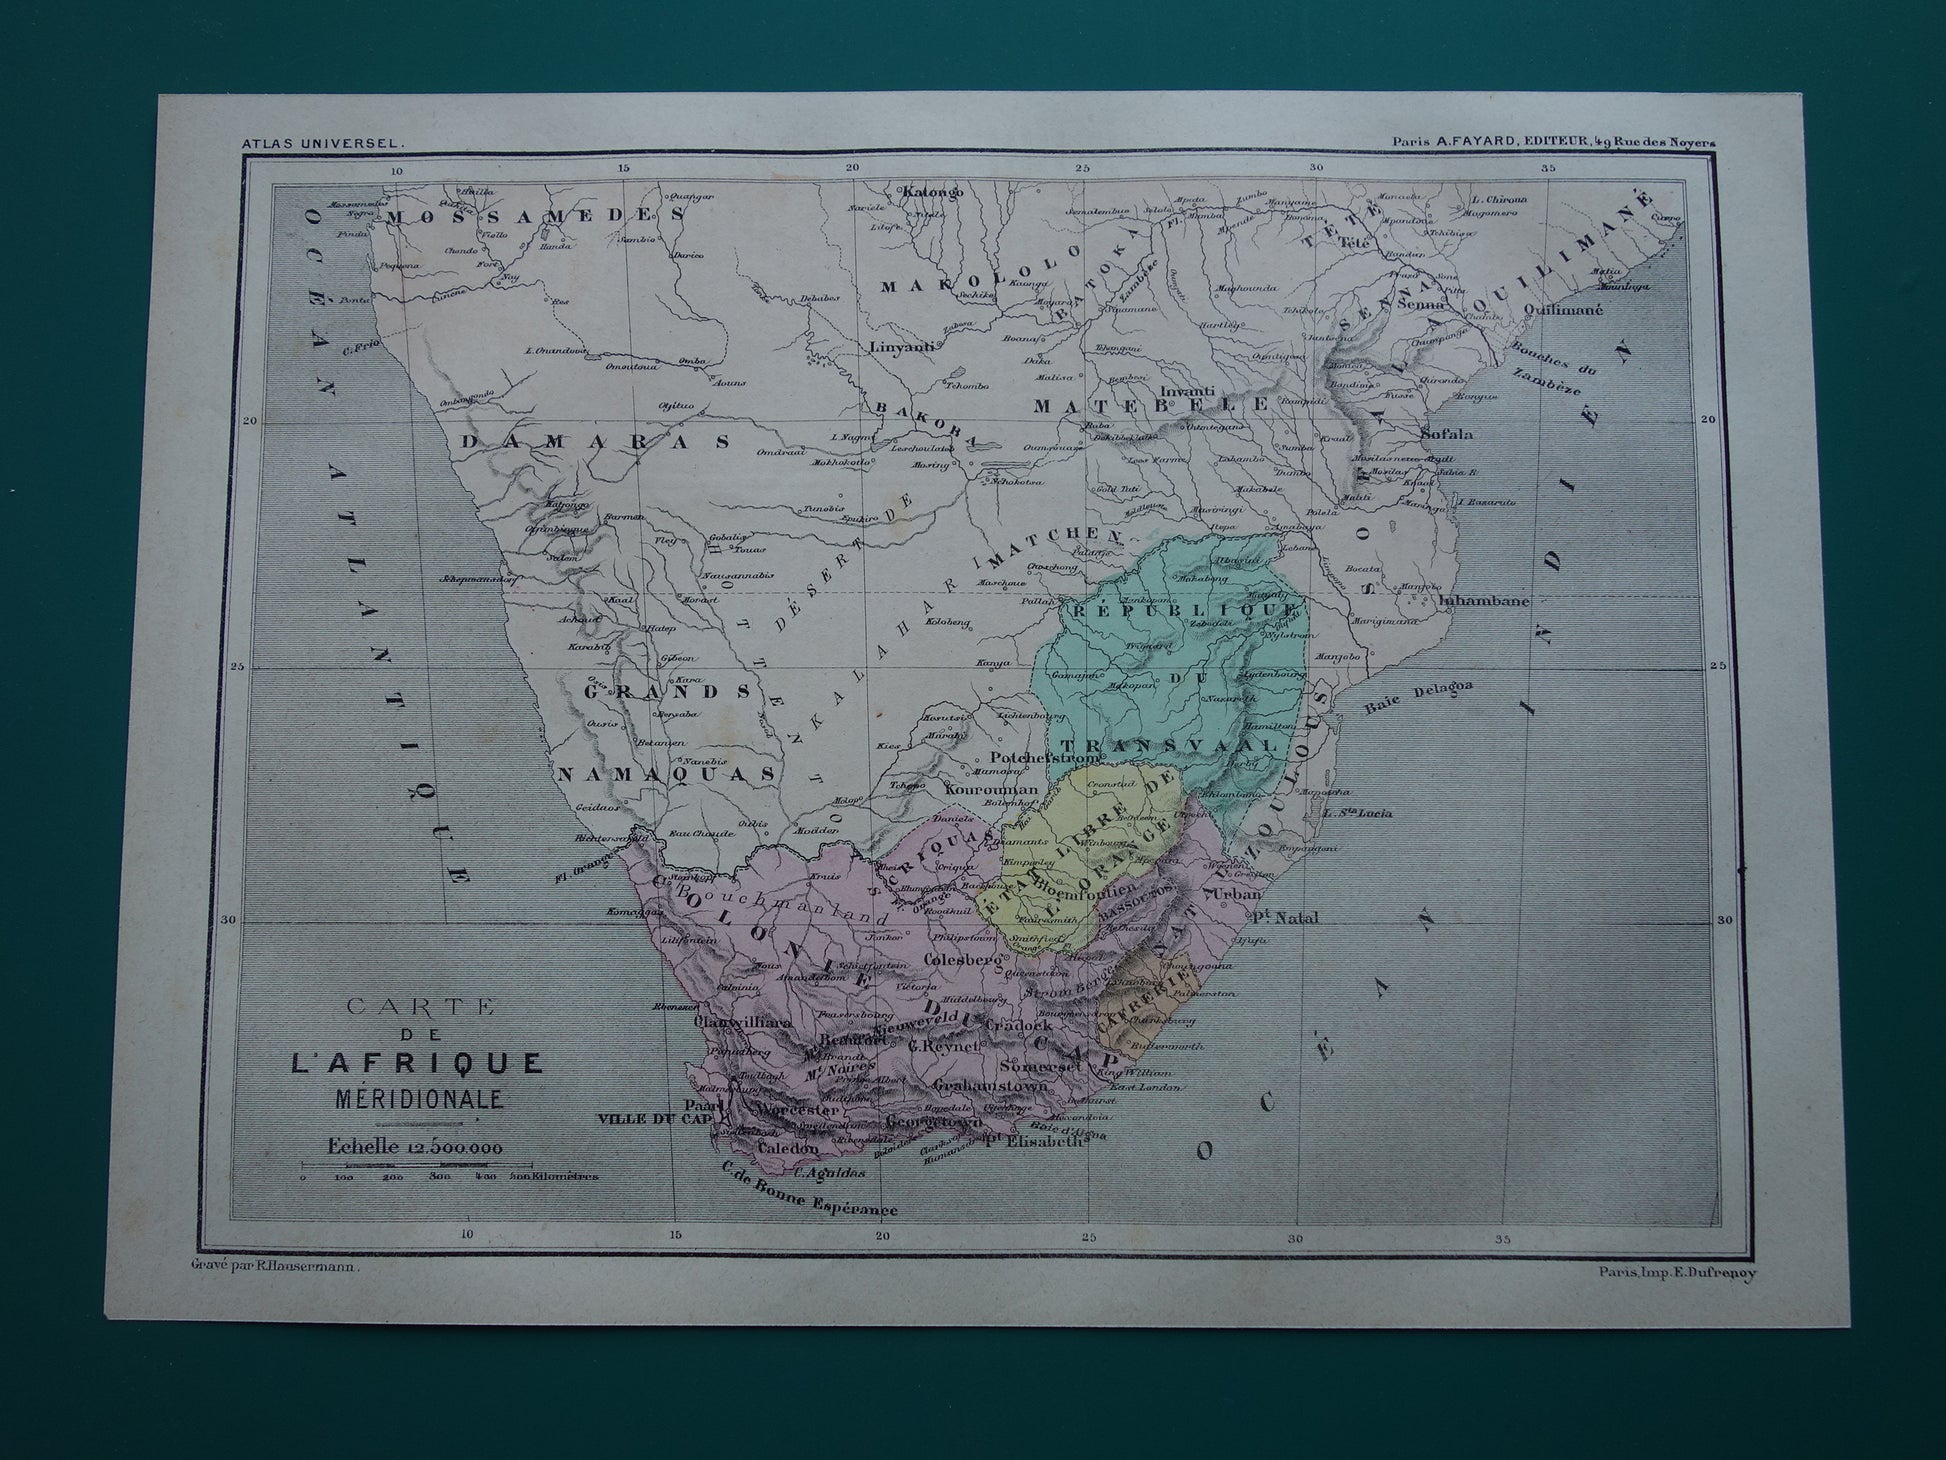 ZUID-AFRIKA Oude kaart van zuidelijk Afrika 145+ jaar oude antieke handgekleurde landkaart Kaapkolonie Transvaal